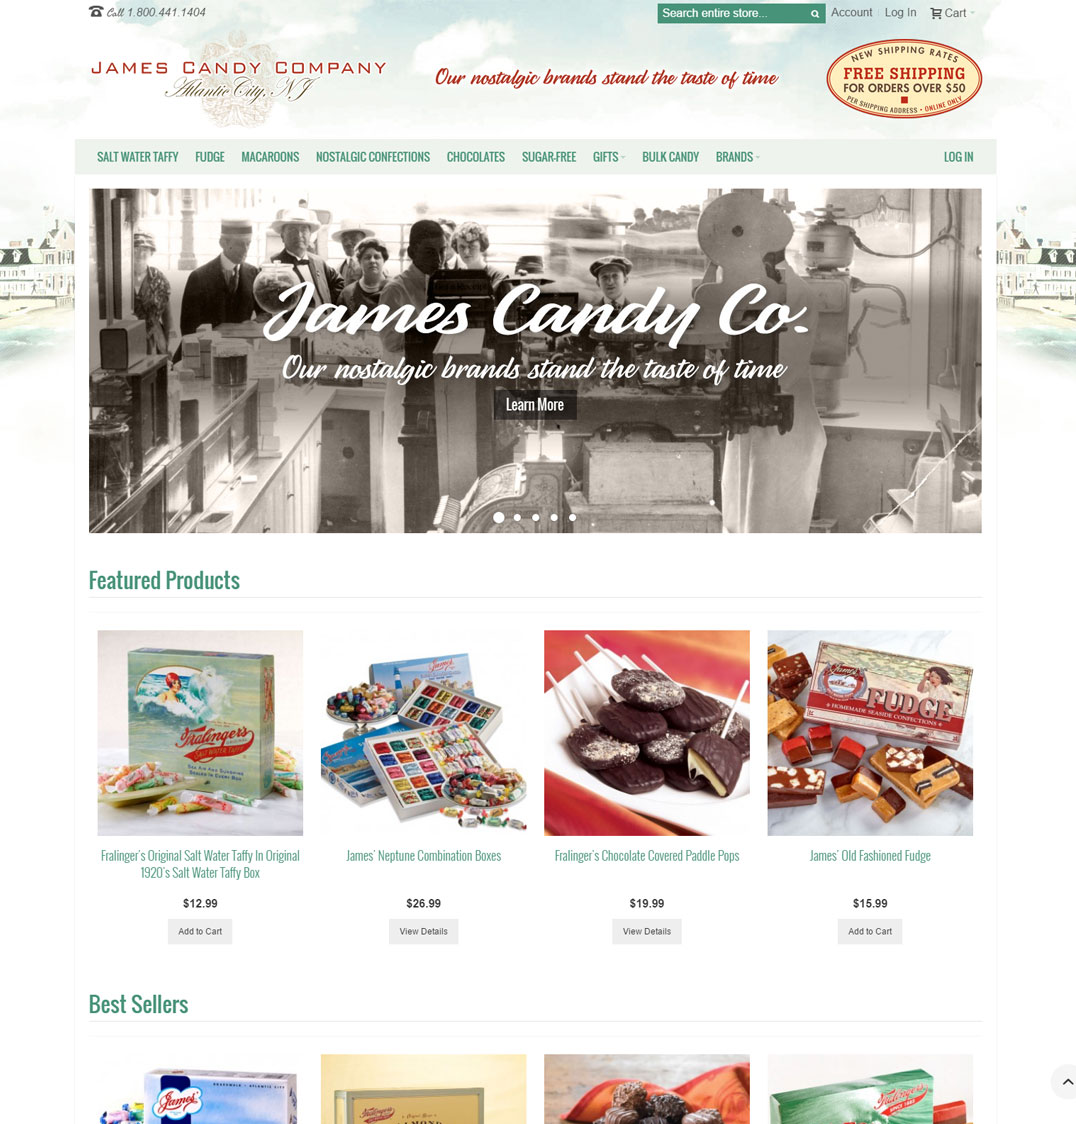 James Candy Company Website Goes Live